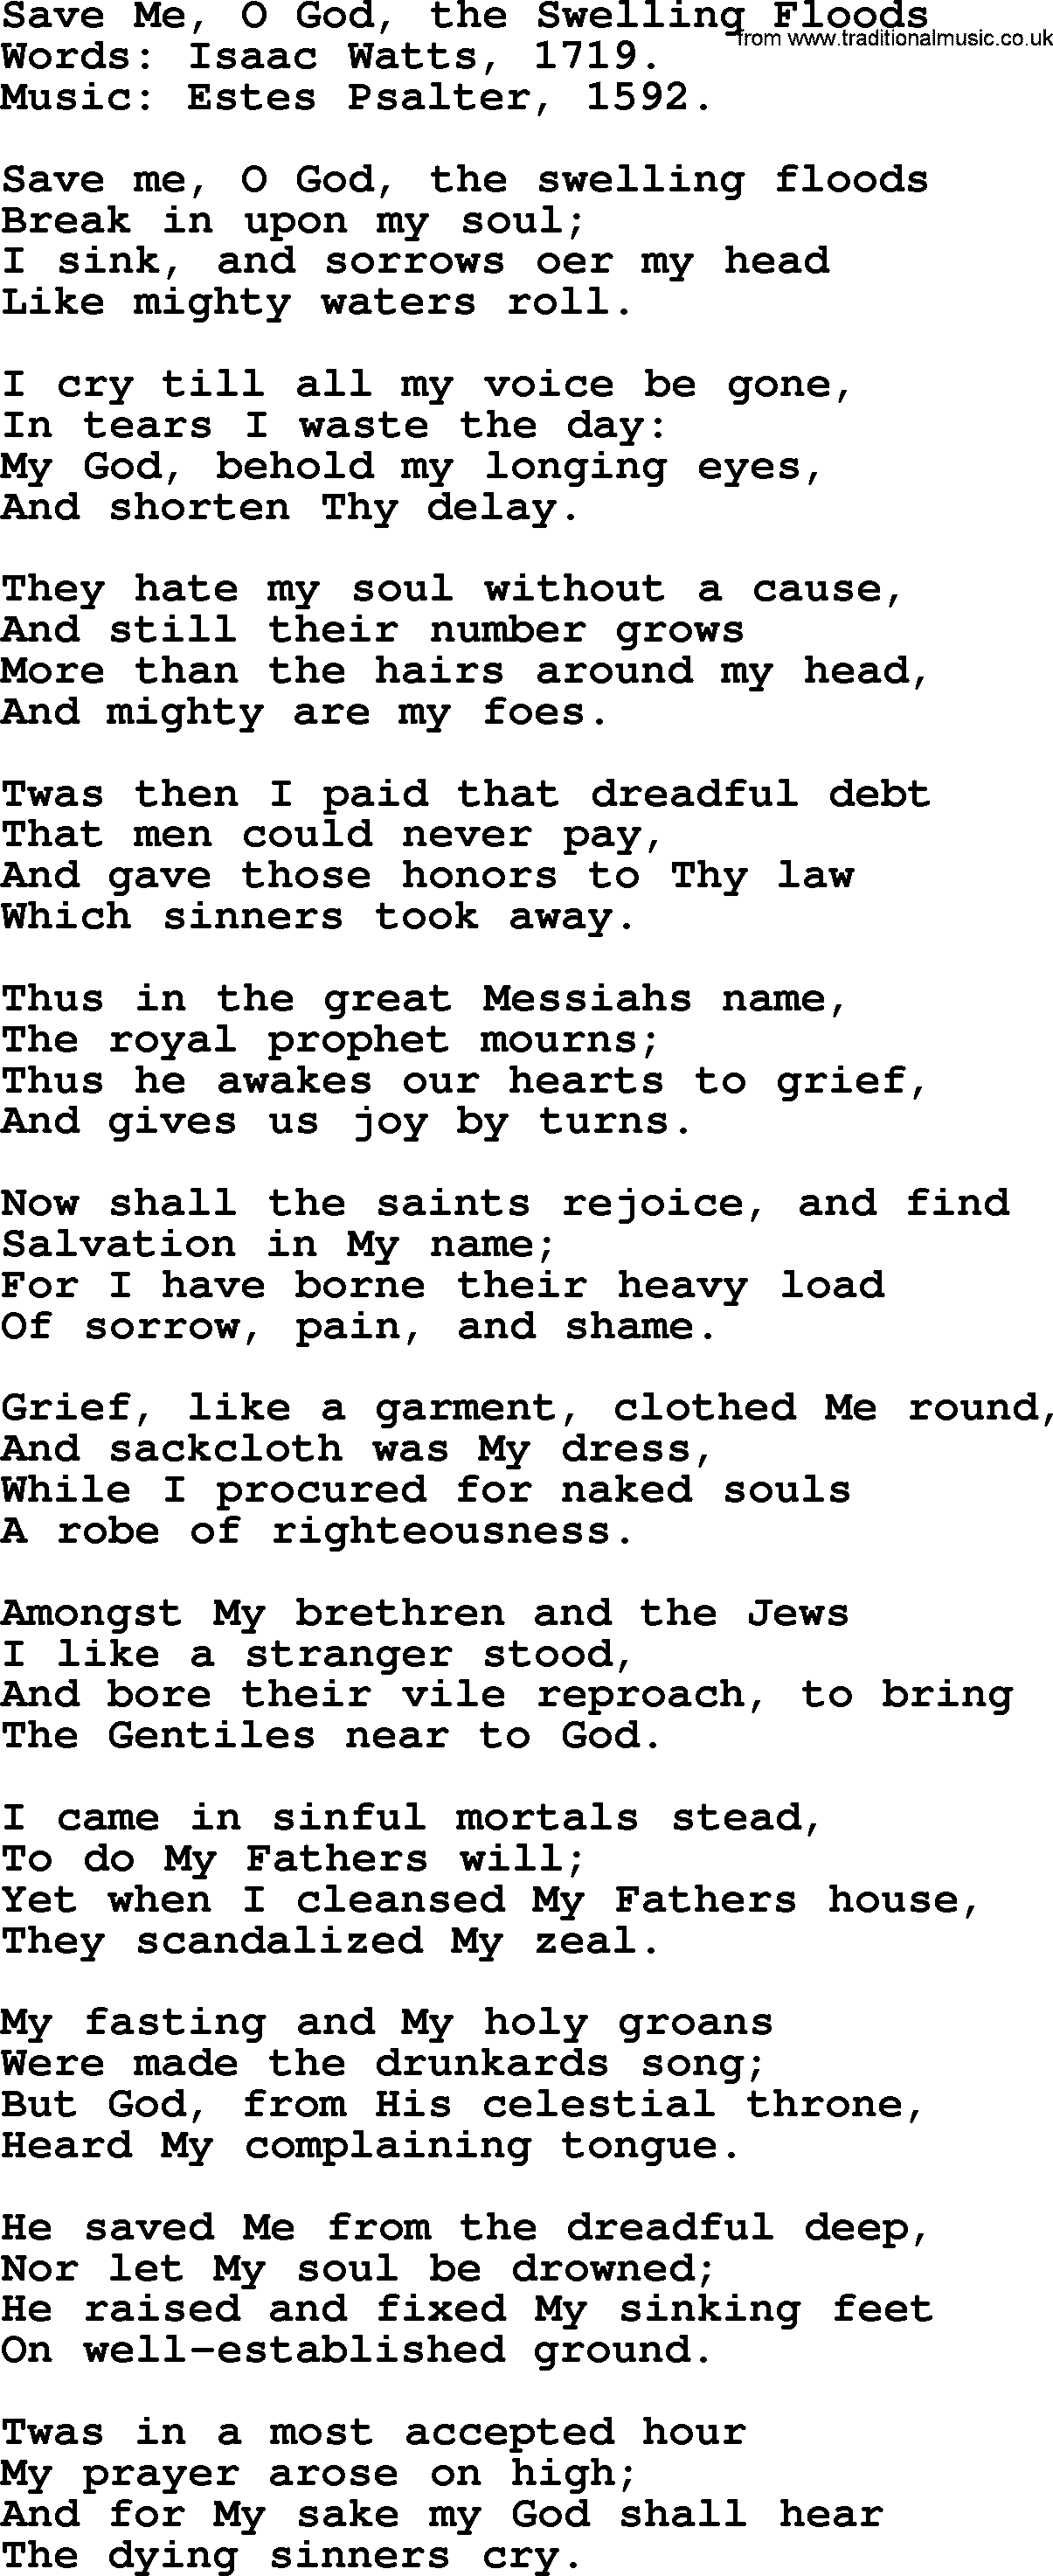 Isaac Watts Christian hymn: Save Me, O God, the Swelling Floods- lyricss